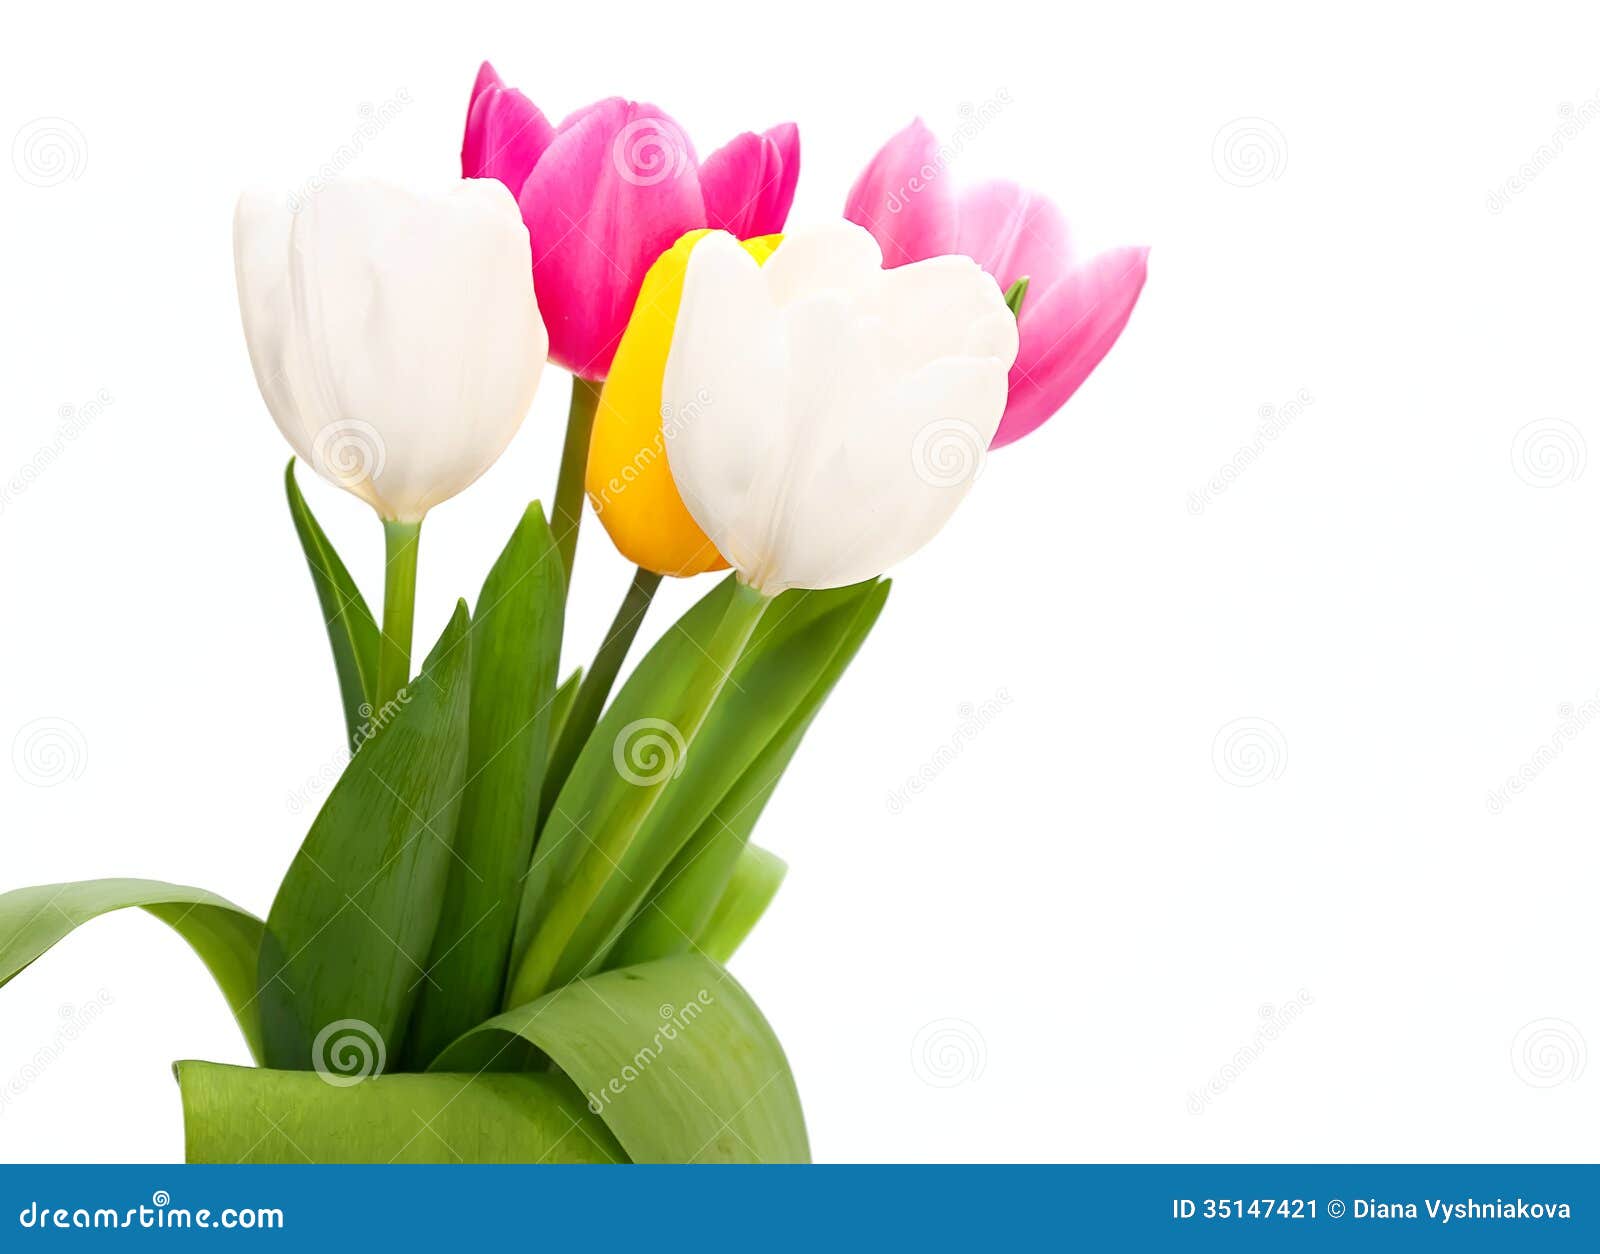 Colorful tulips stock image. Image of beauty, beautiful - 35147421